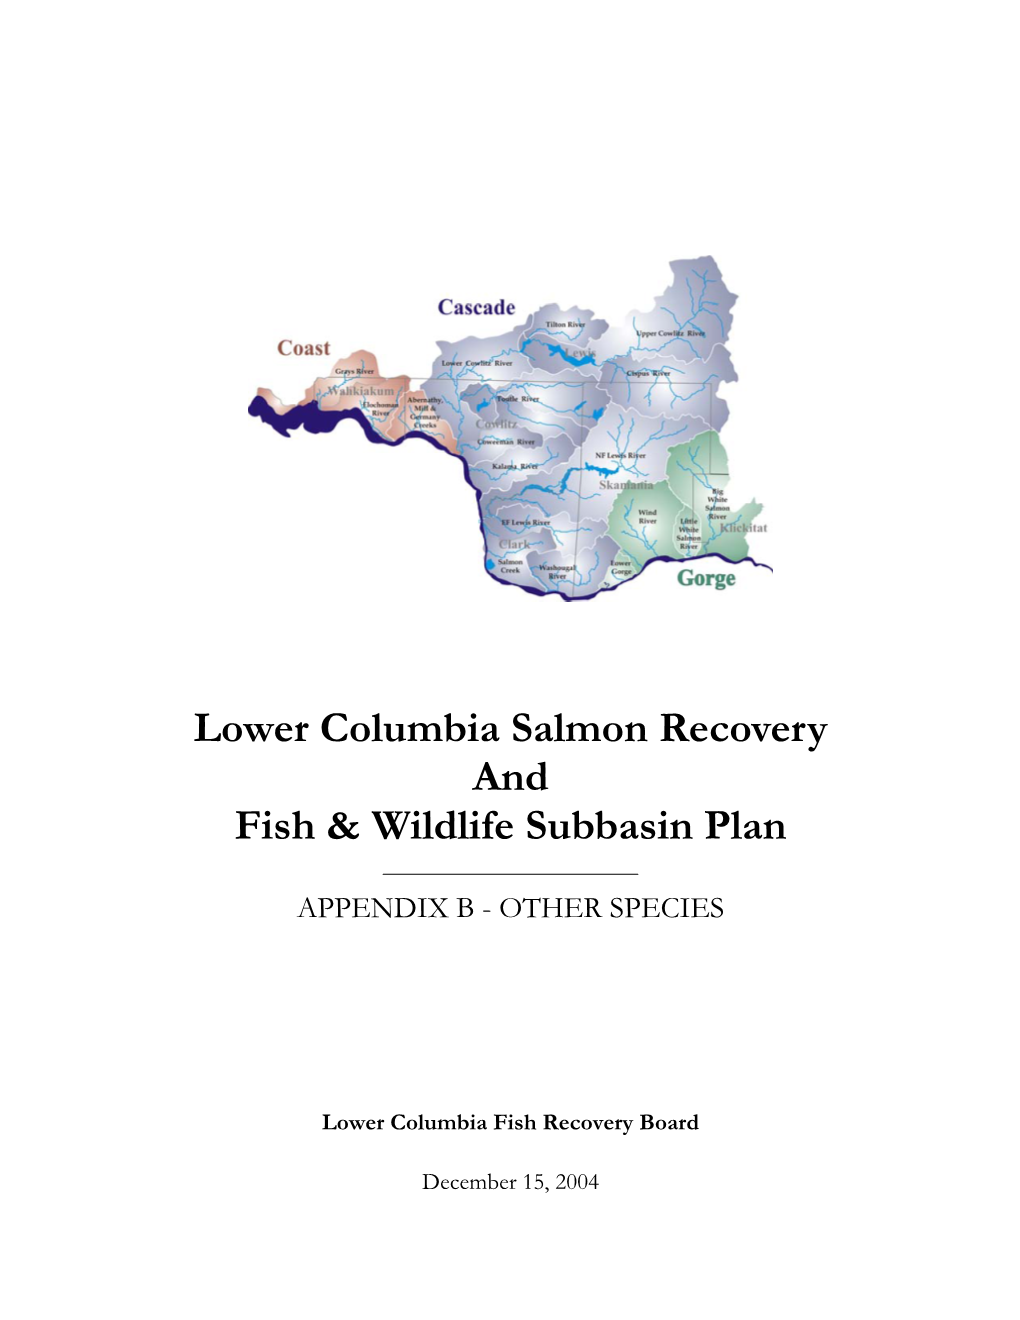 Lower Columbia Salmon Recovery and Fish & Wildlife Subbasin Plan